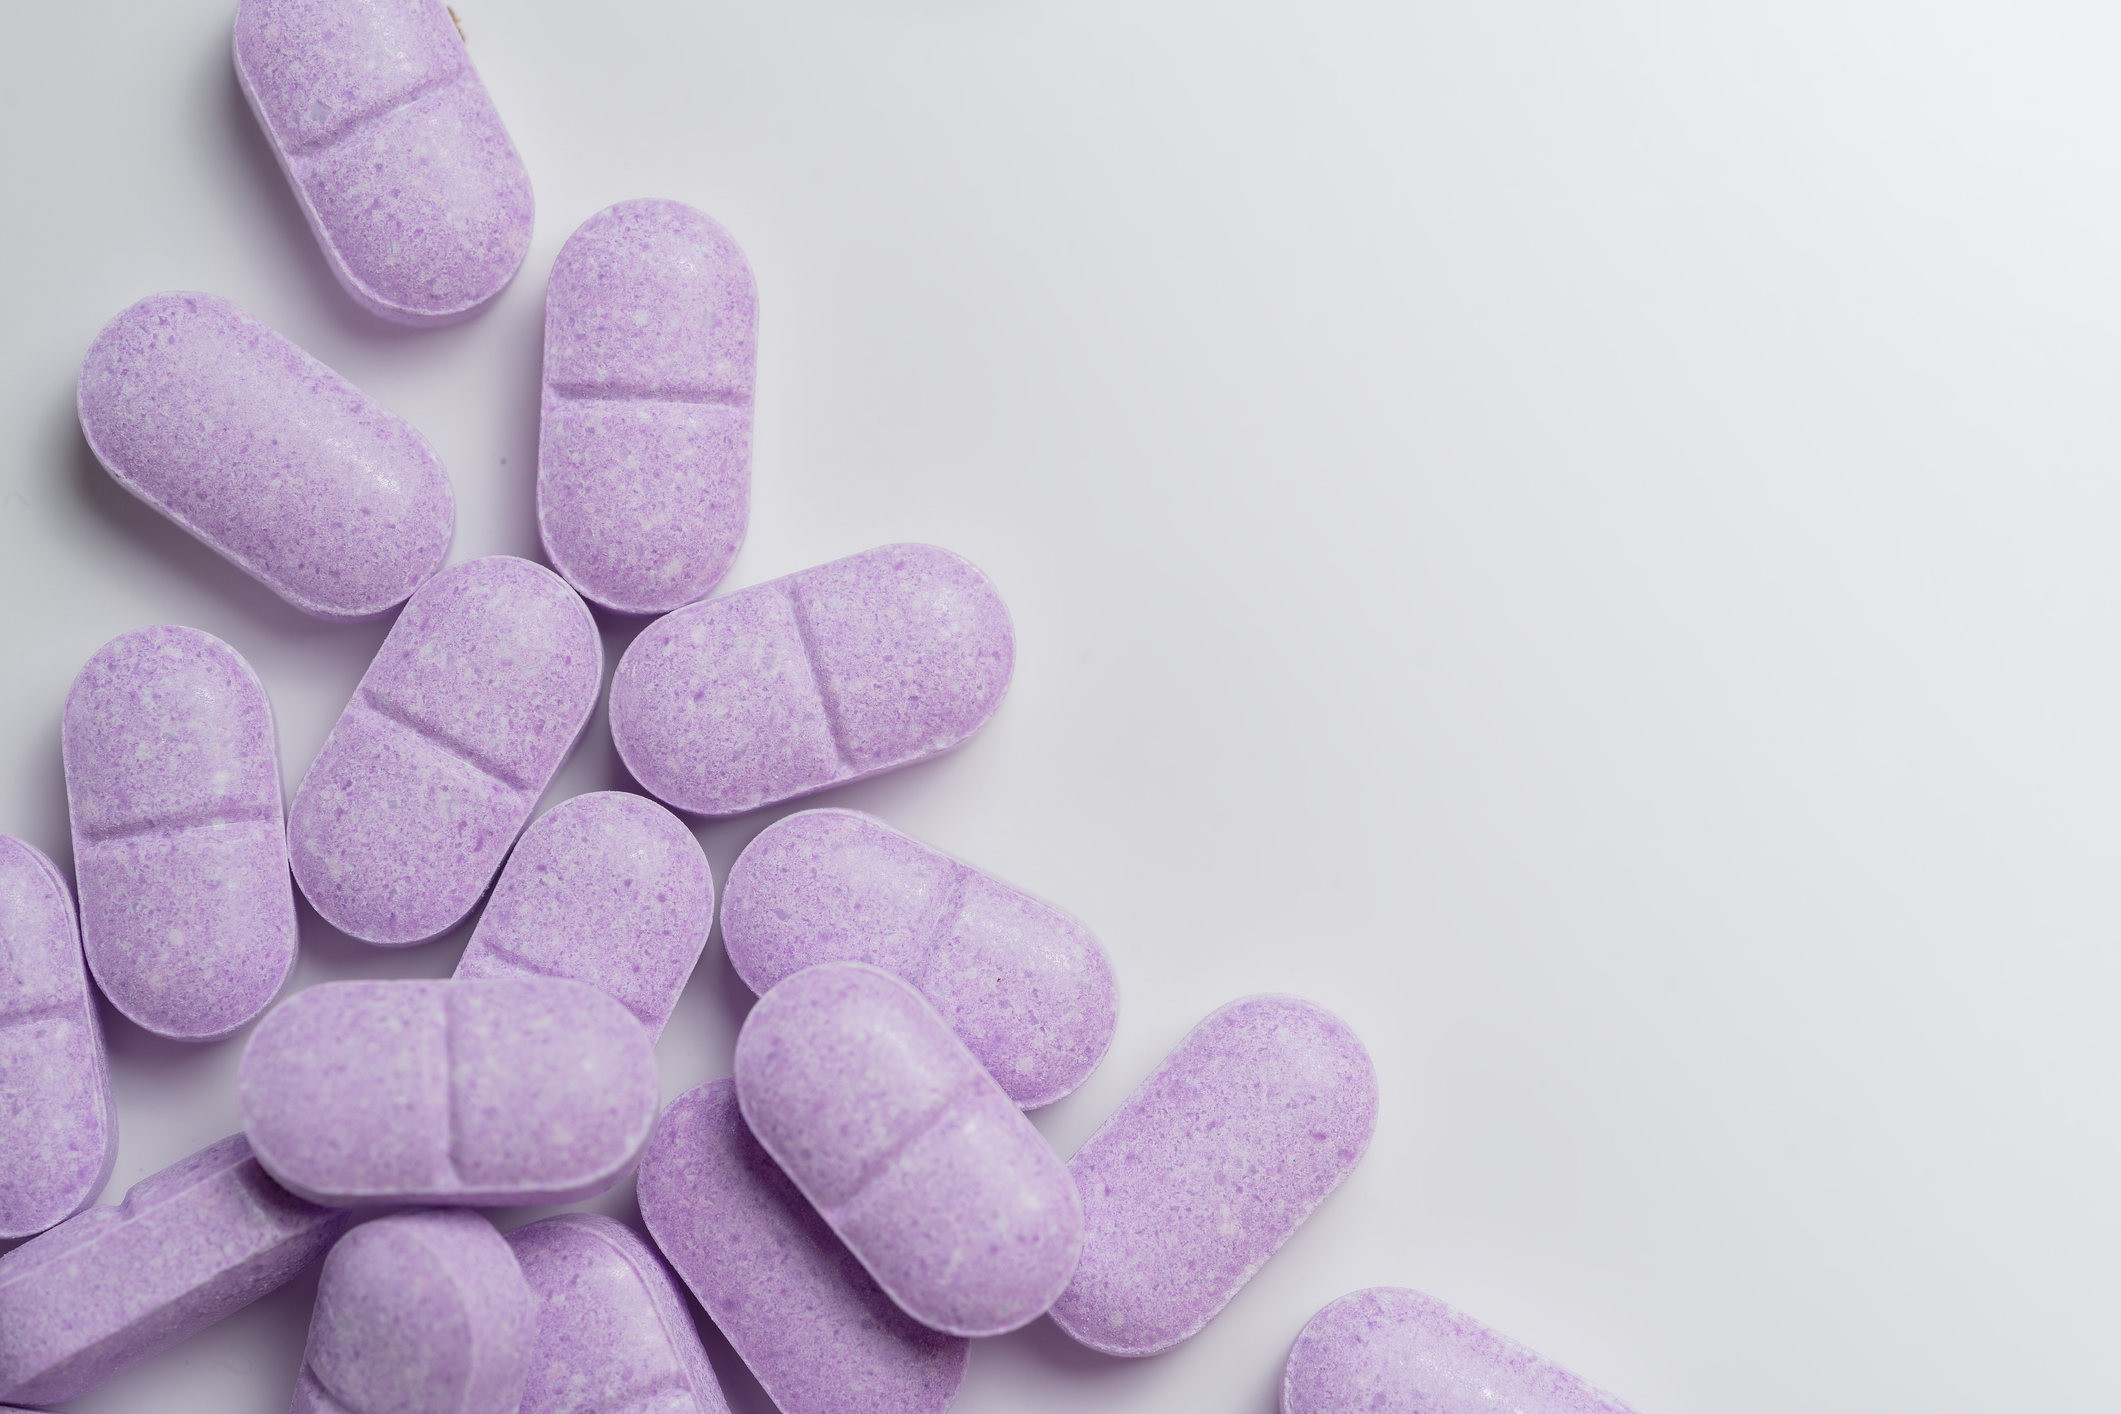 Purple scored chewable Vitamin C tablets arranged in a random cluster.